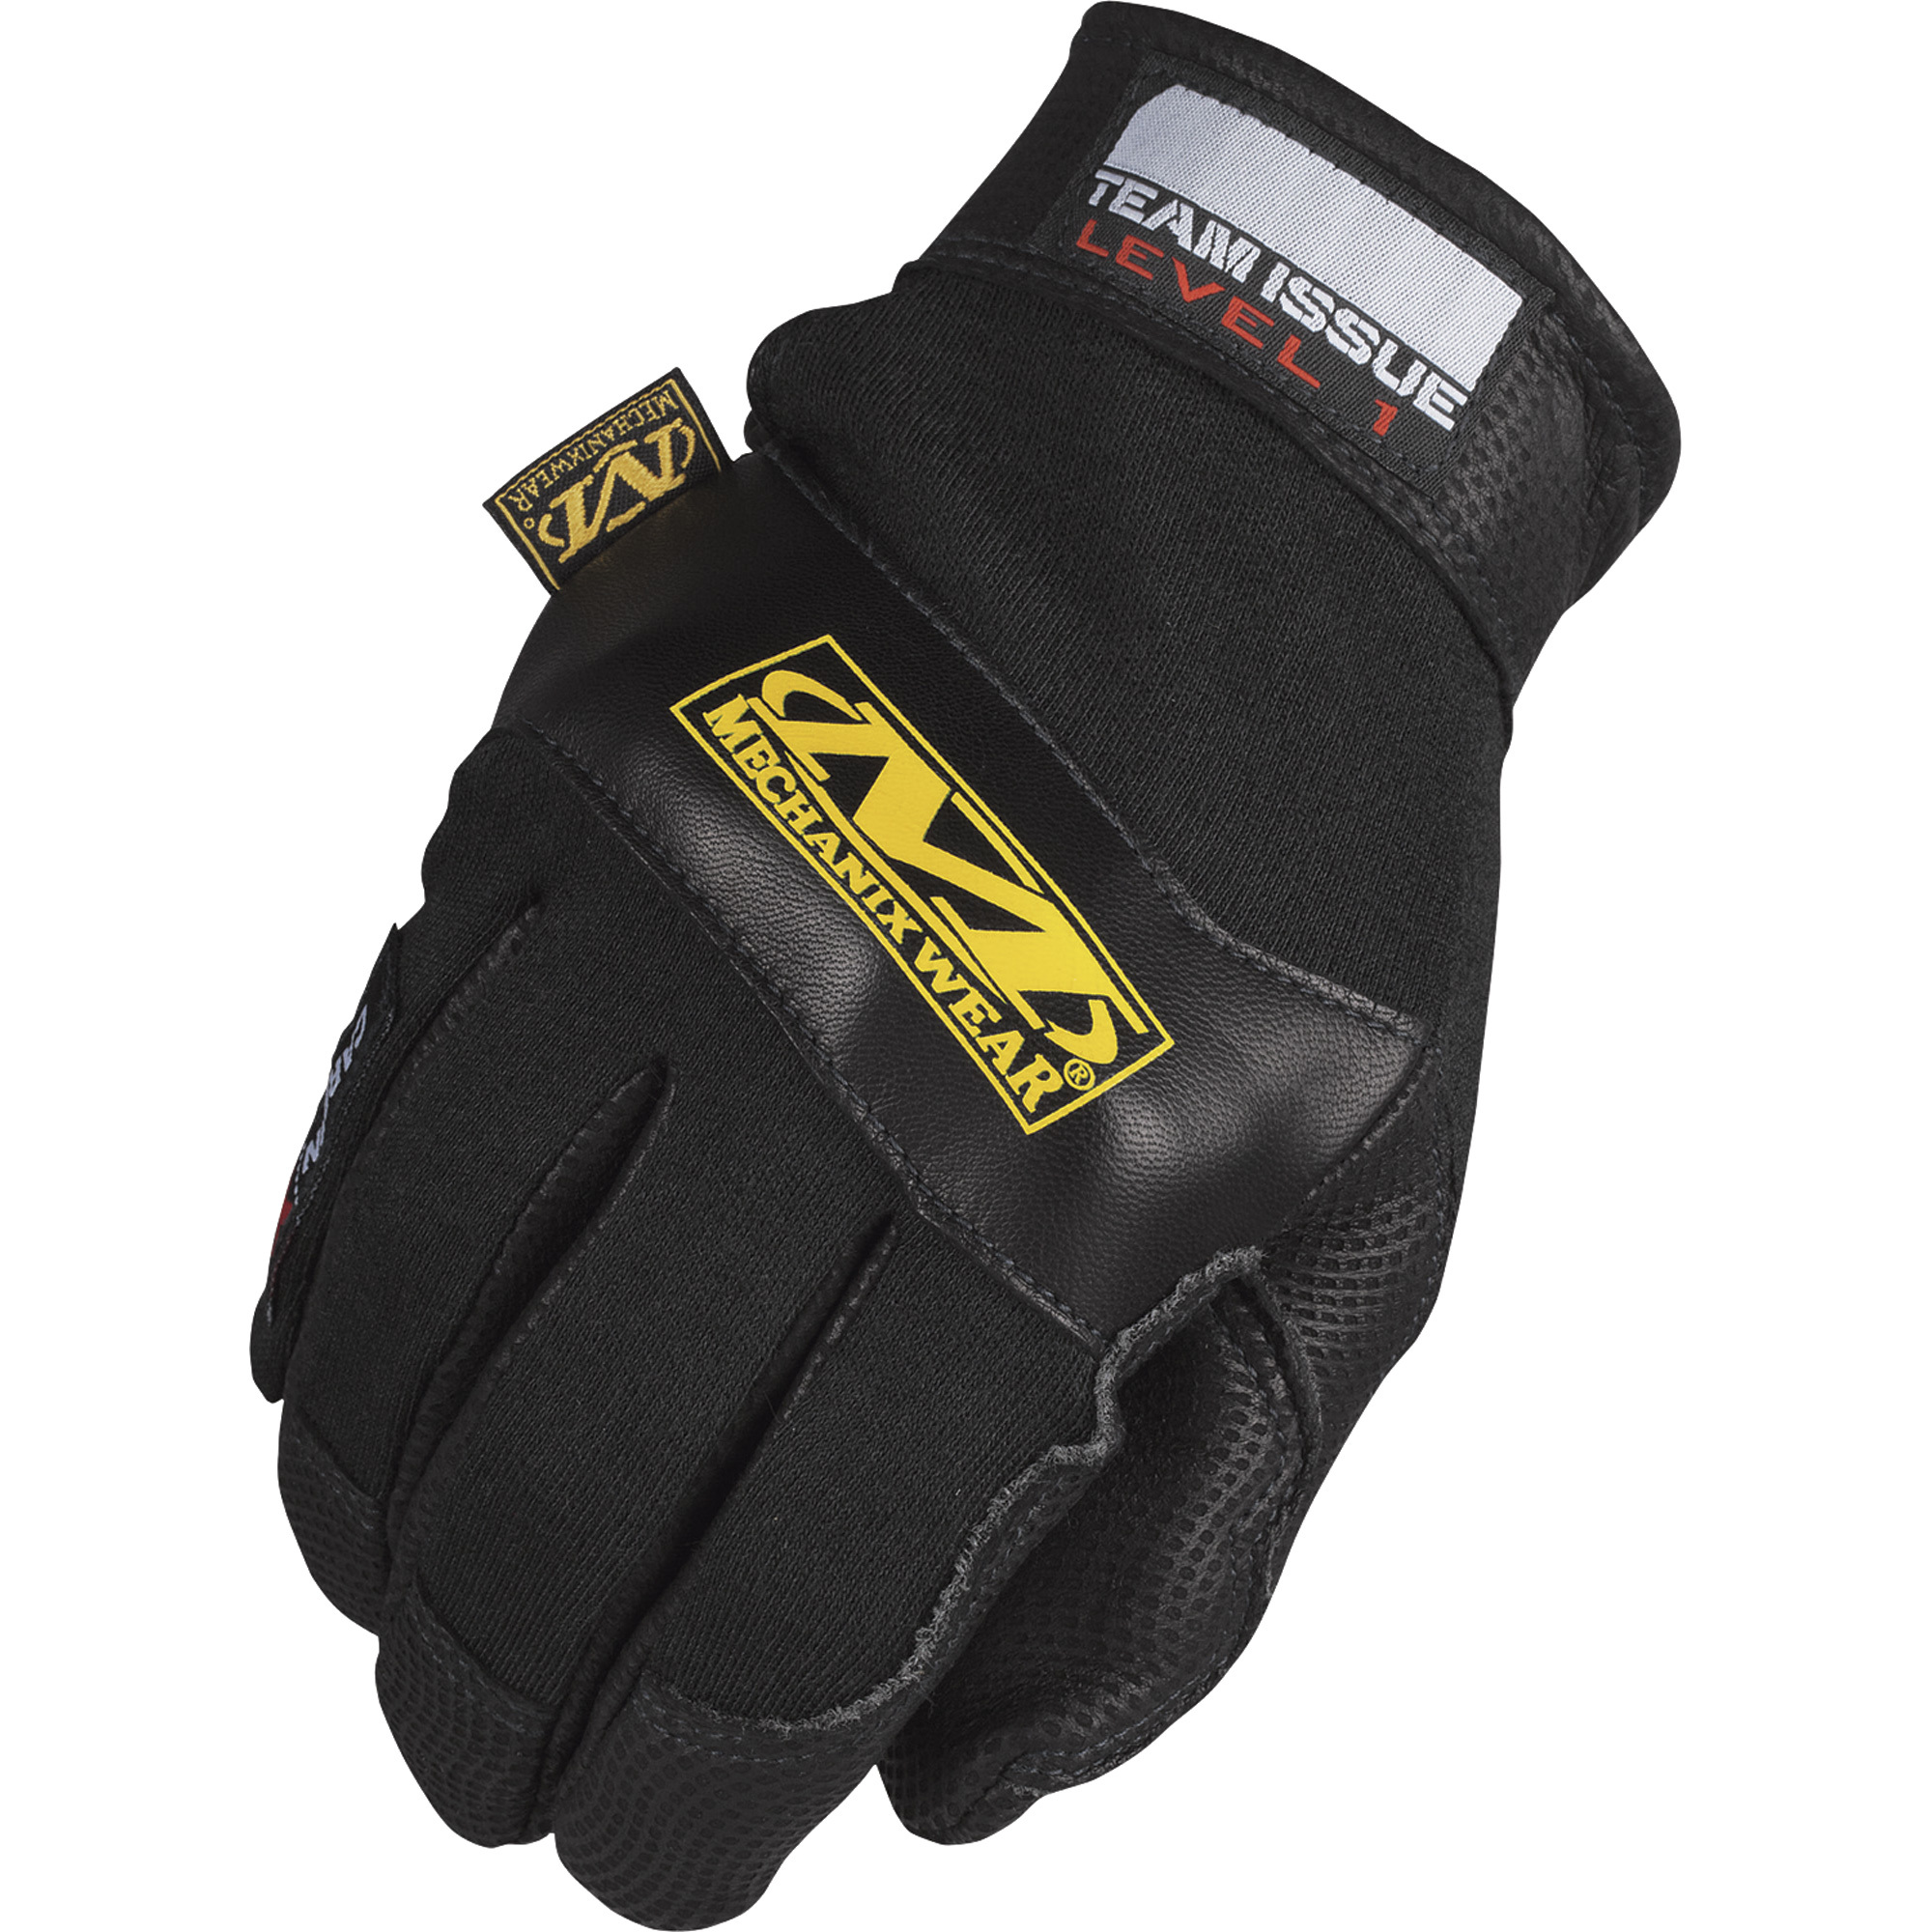 Mechanix Men's Wear Carbon-X Level 1 Glove - Black, Small, Model CXG-L1